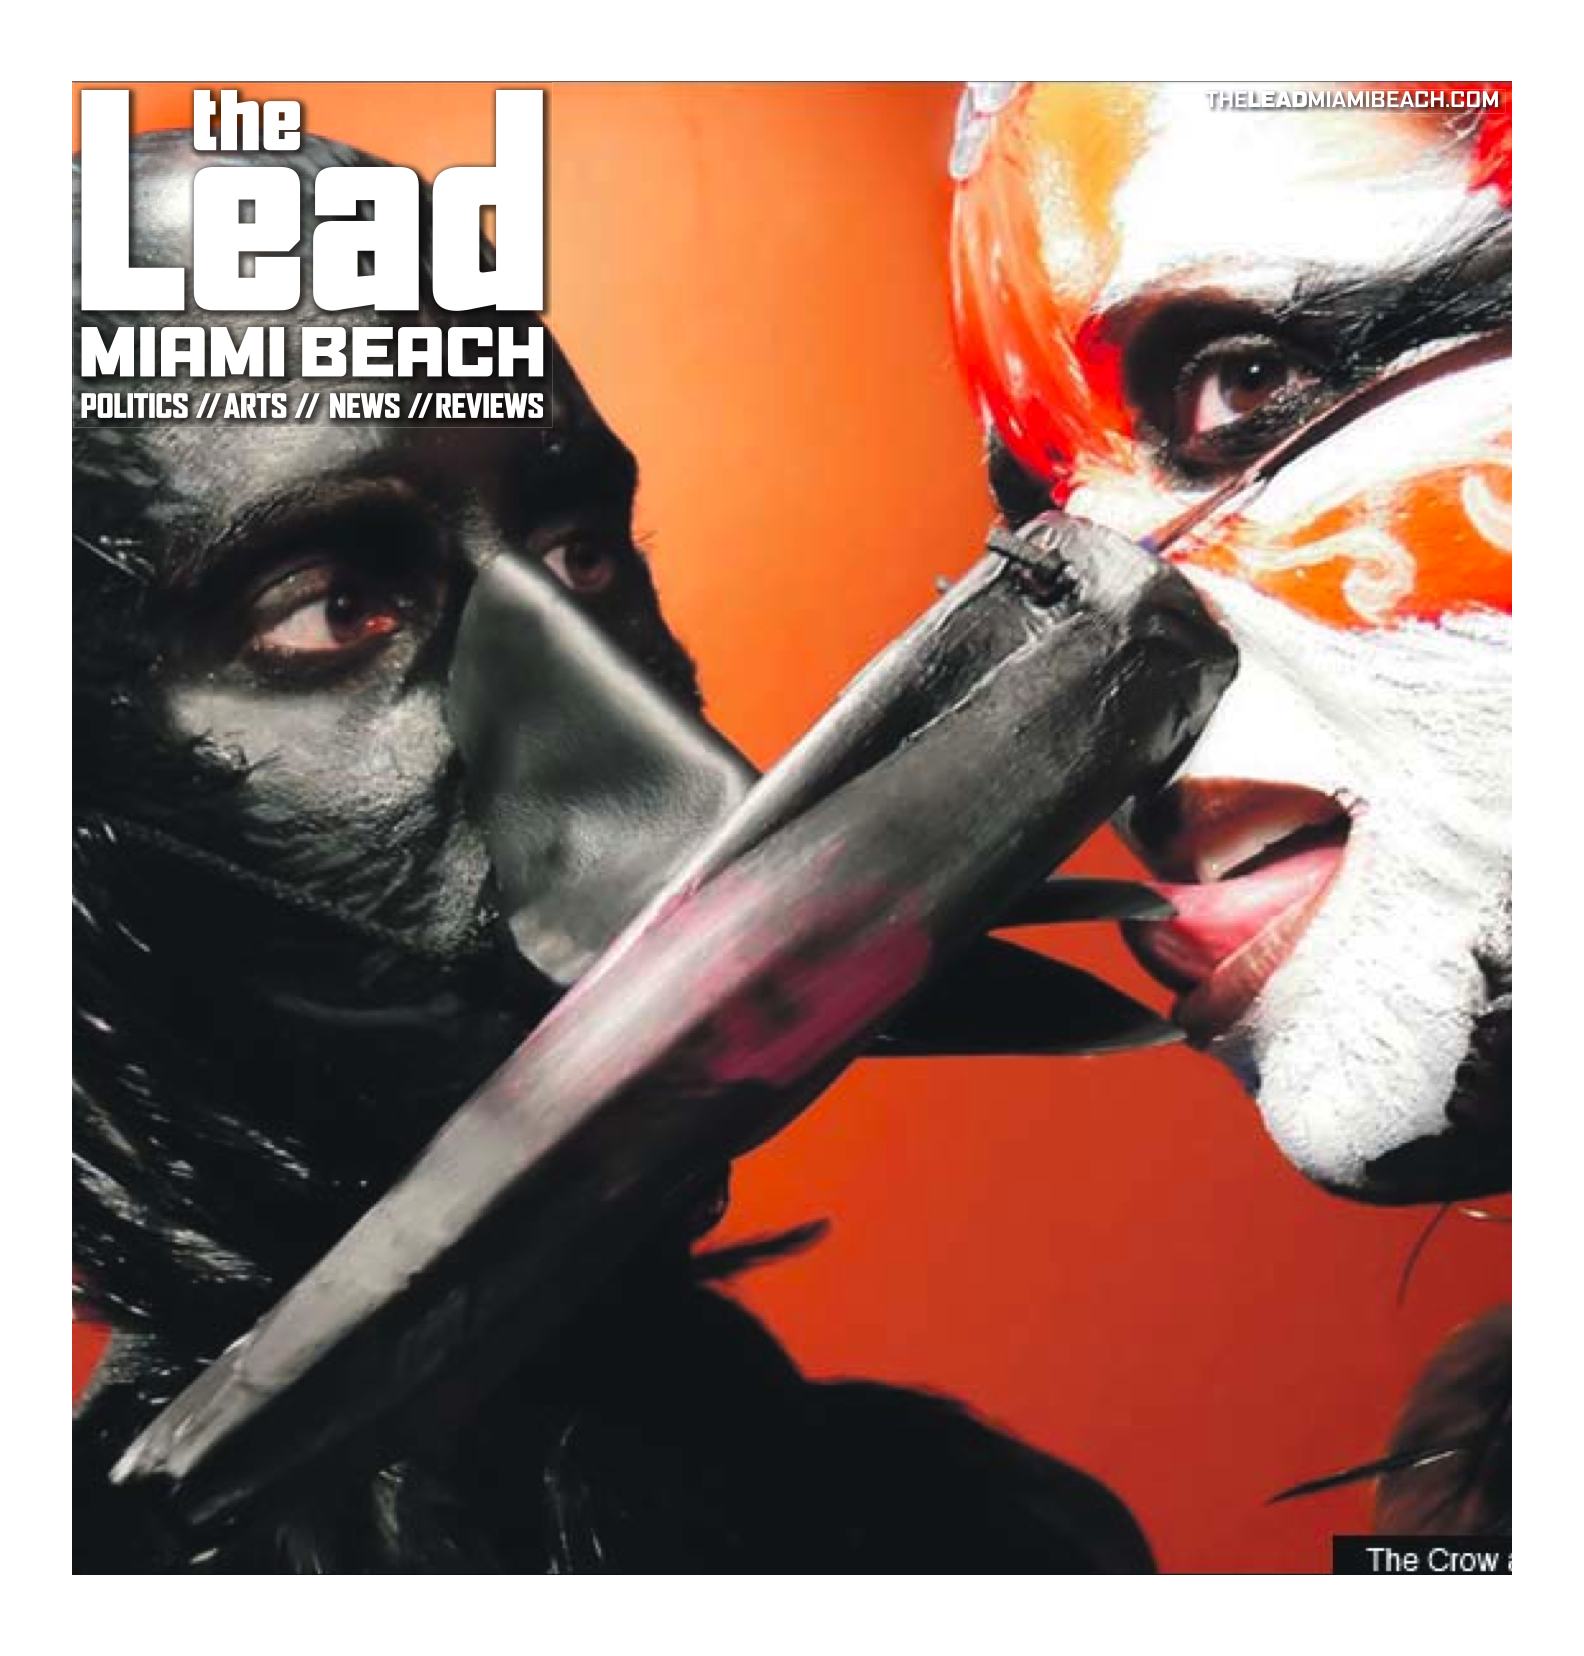 Cover Lead Magazine 2010. Bird on the Right is Milcho, Black Bird Joel Molina.